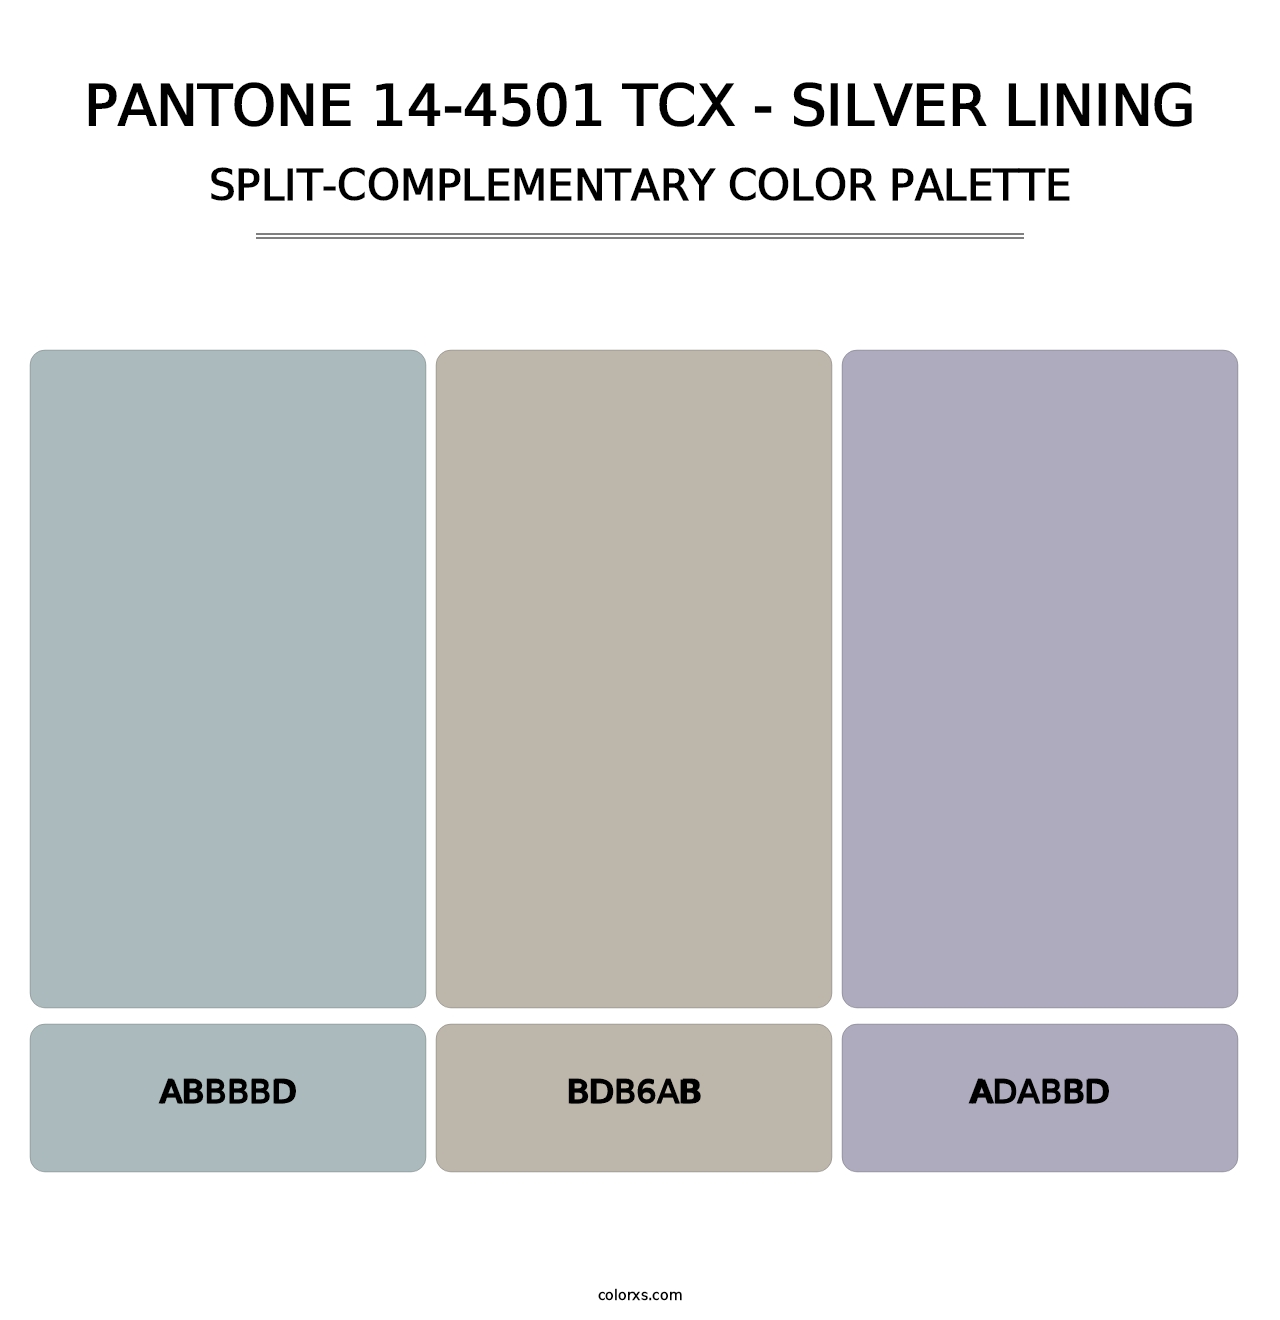 PANTONE 14-4501 TCX - Silver Lining - Split-Complementary Color Palette